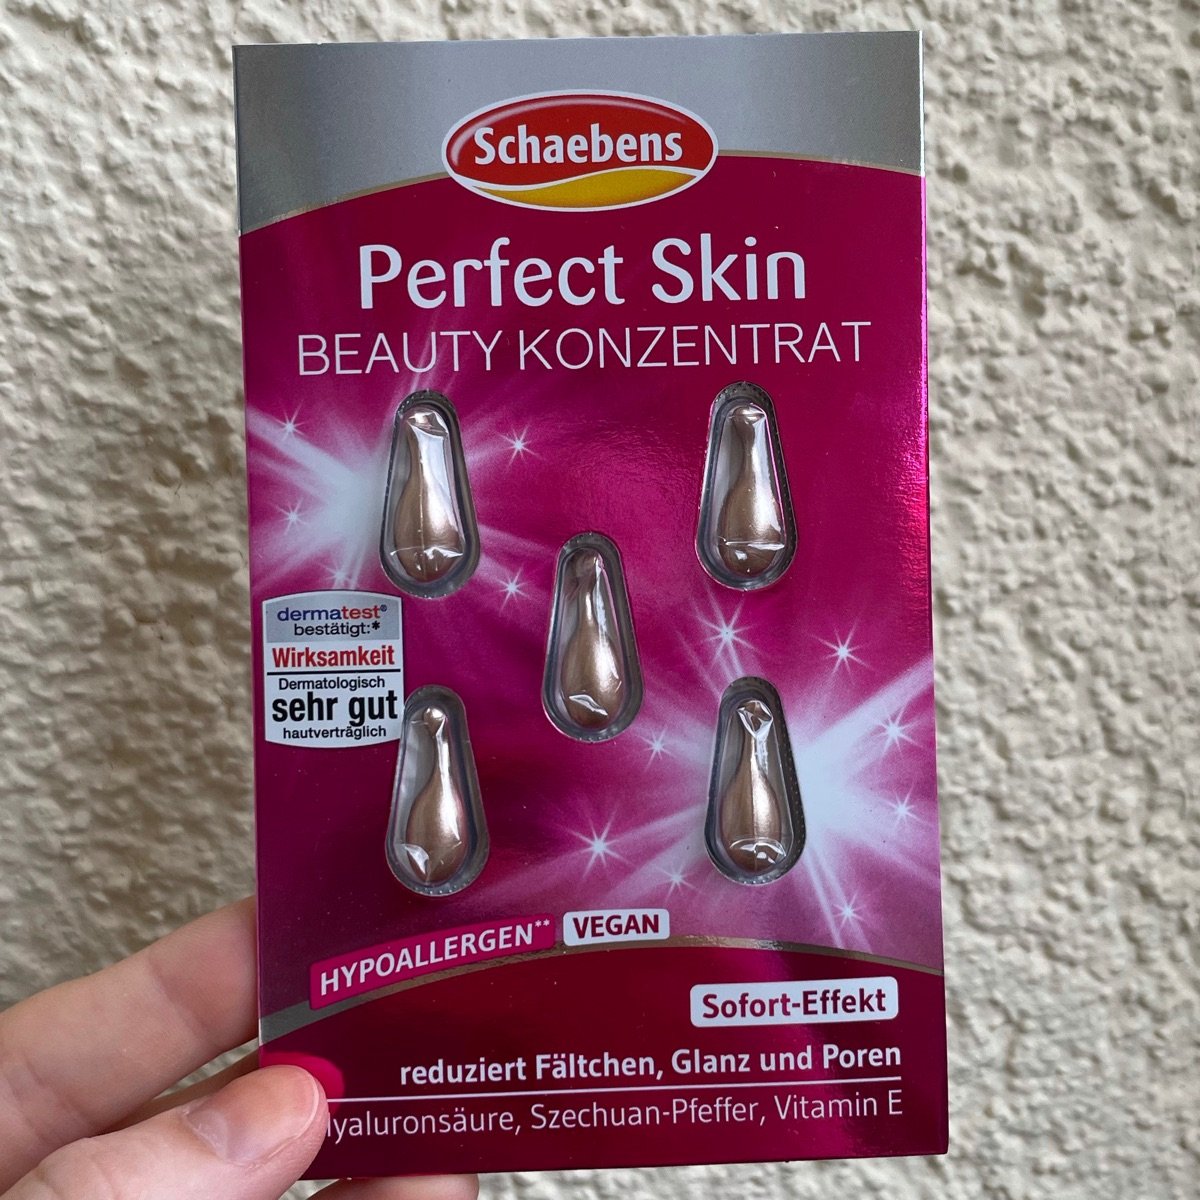 Schaebens Perfect Skin Beauty Konzentrat Review